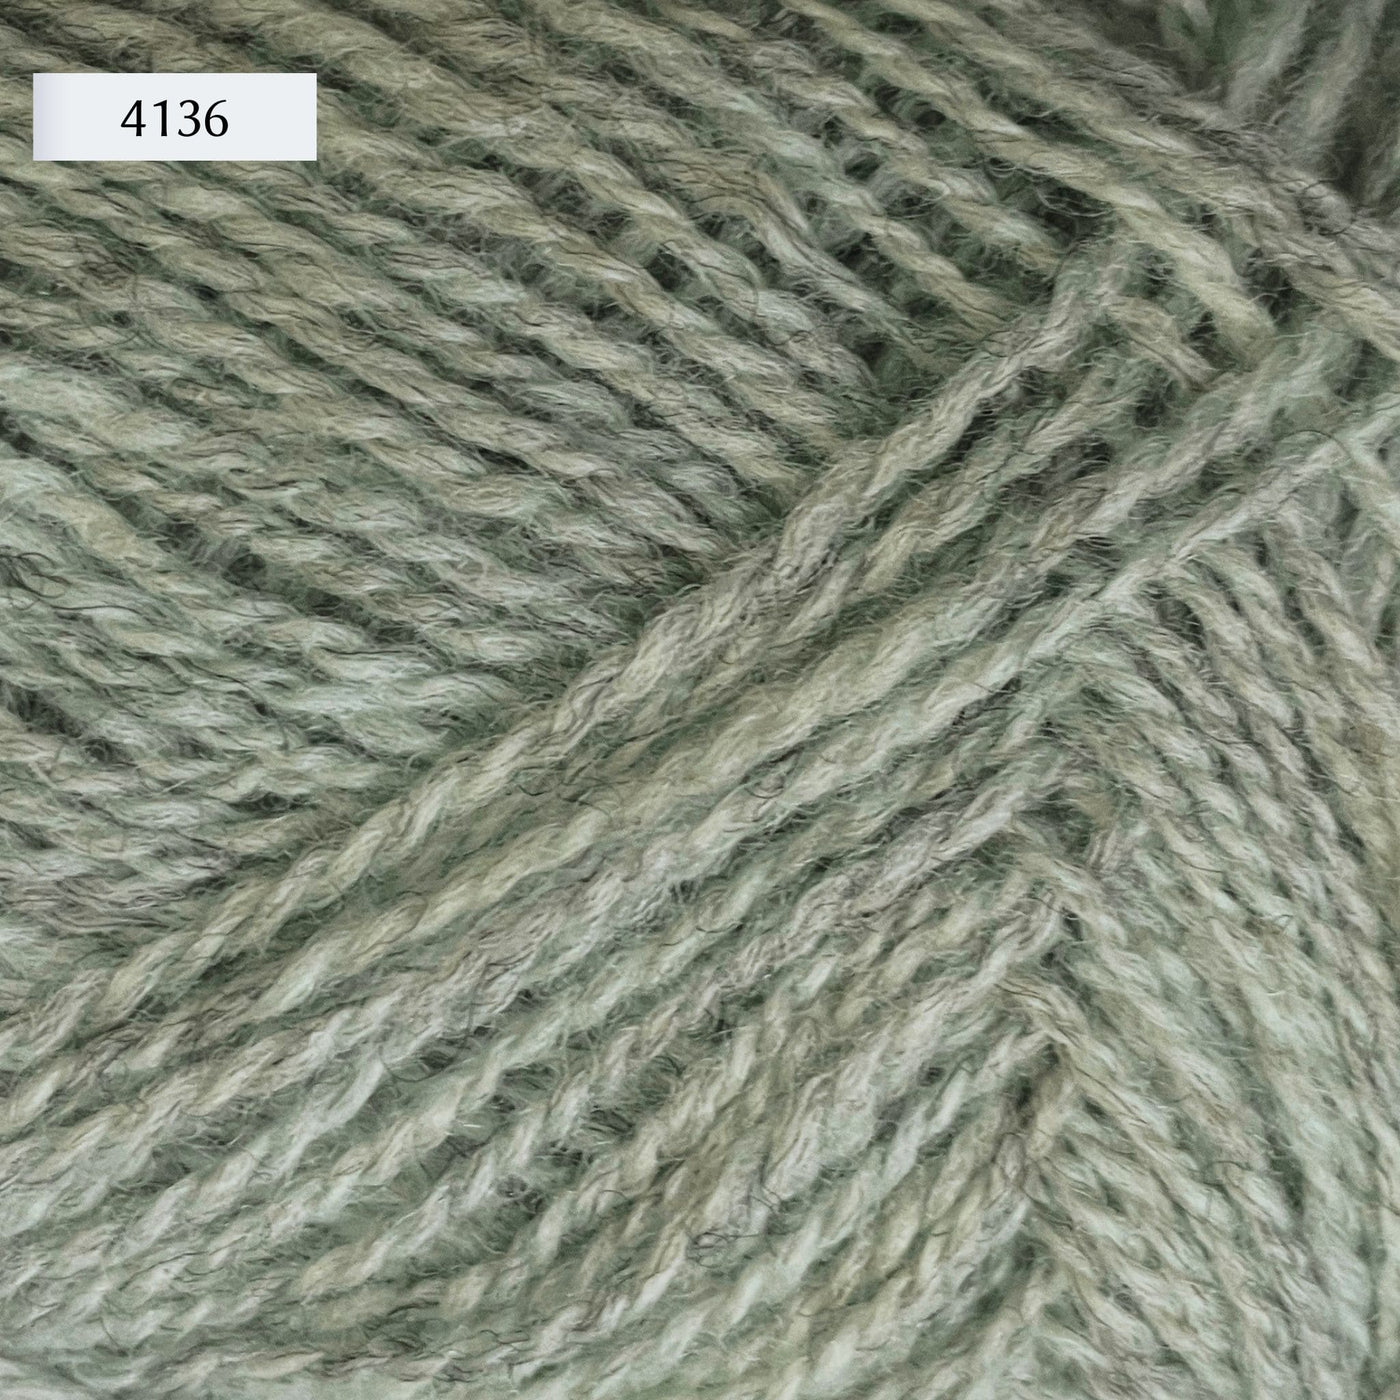 Rauma Finullgarn, a fingering/sport weight yarn, in color 4136, a heathered light mint green